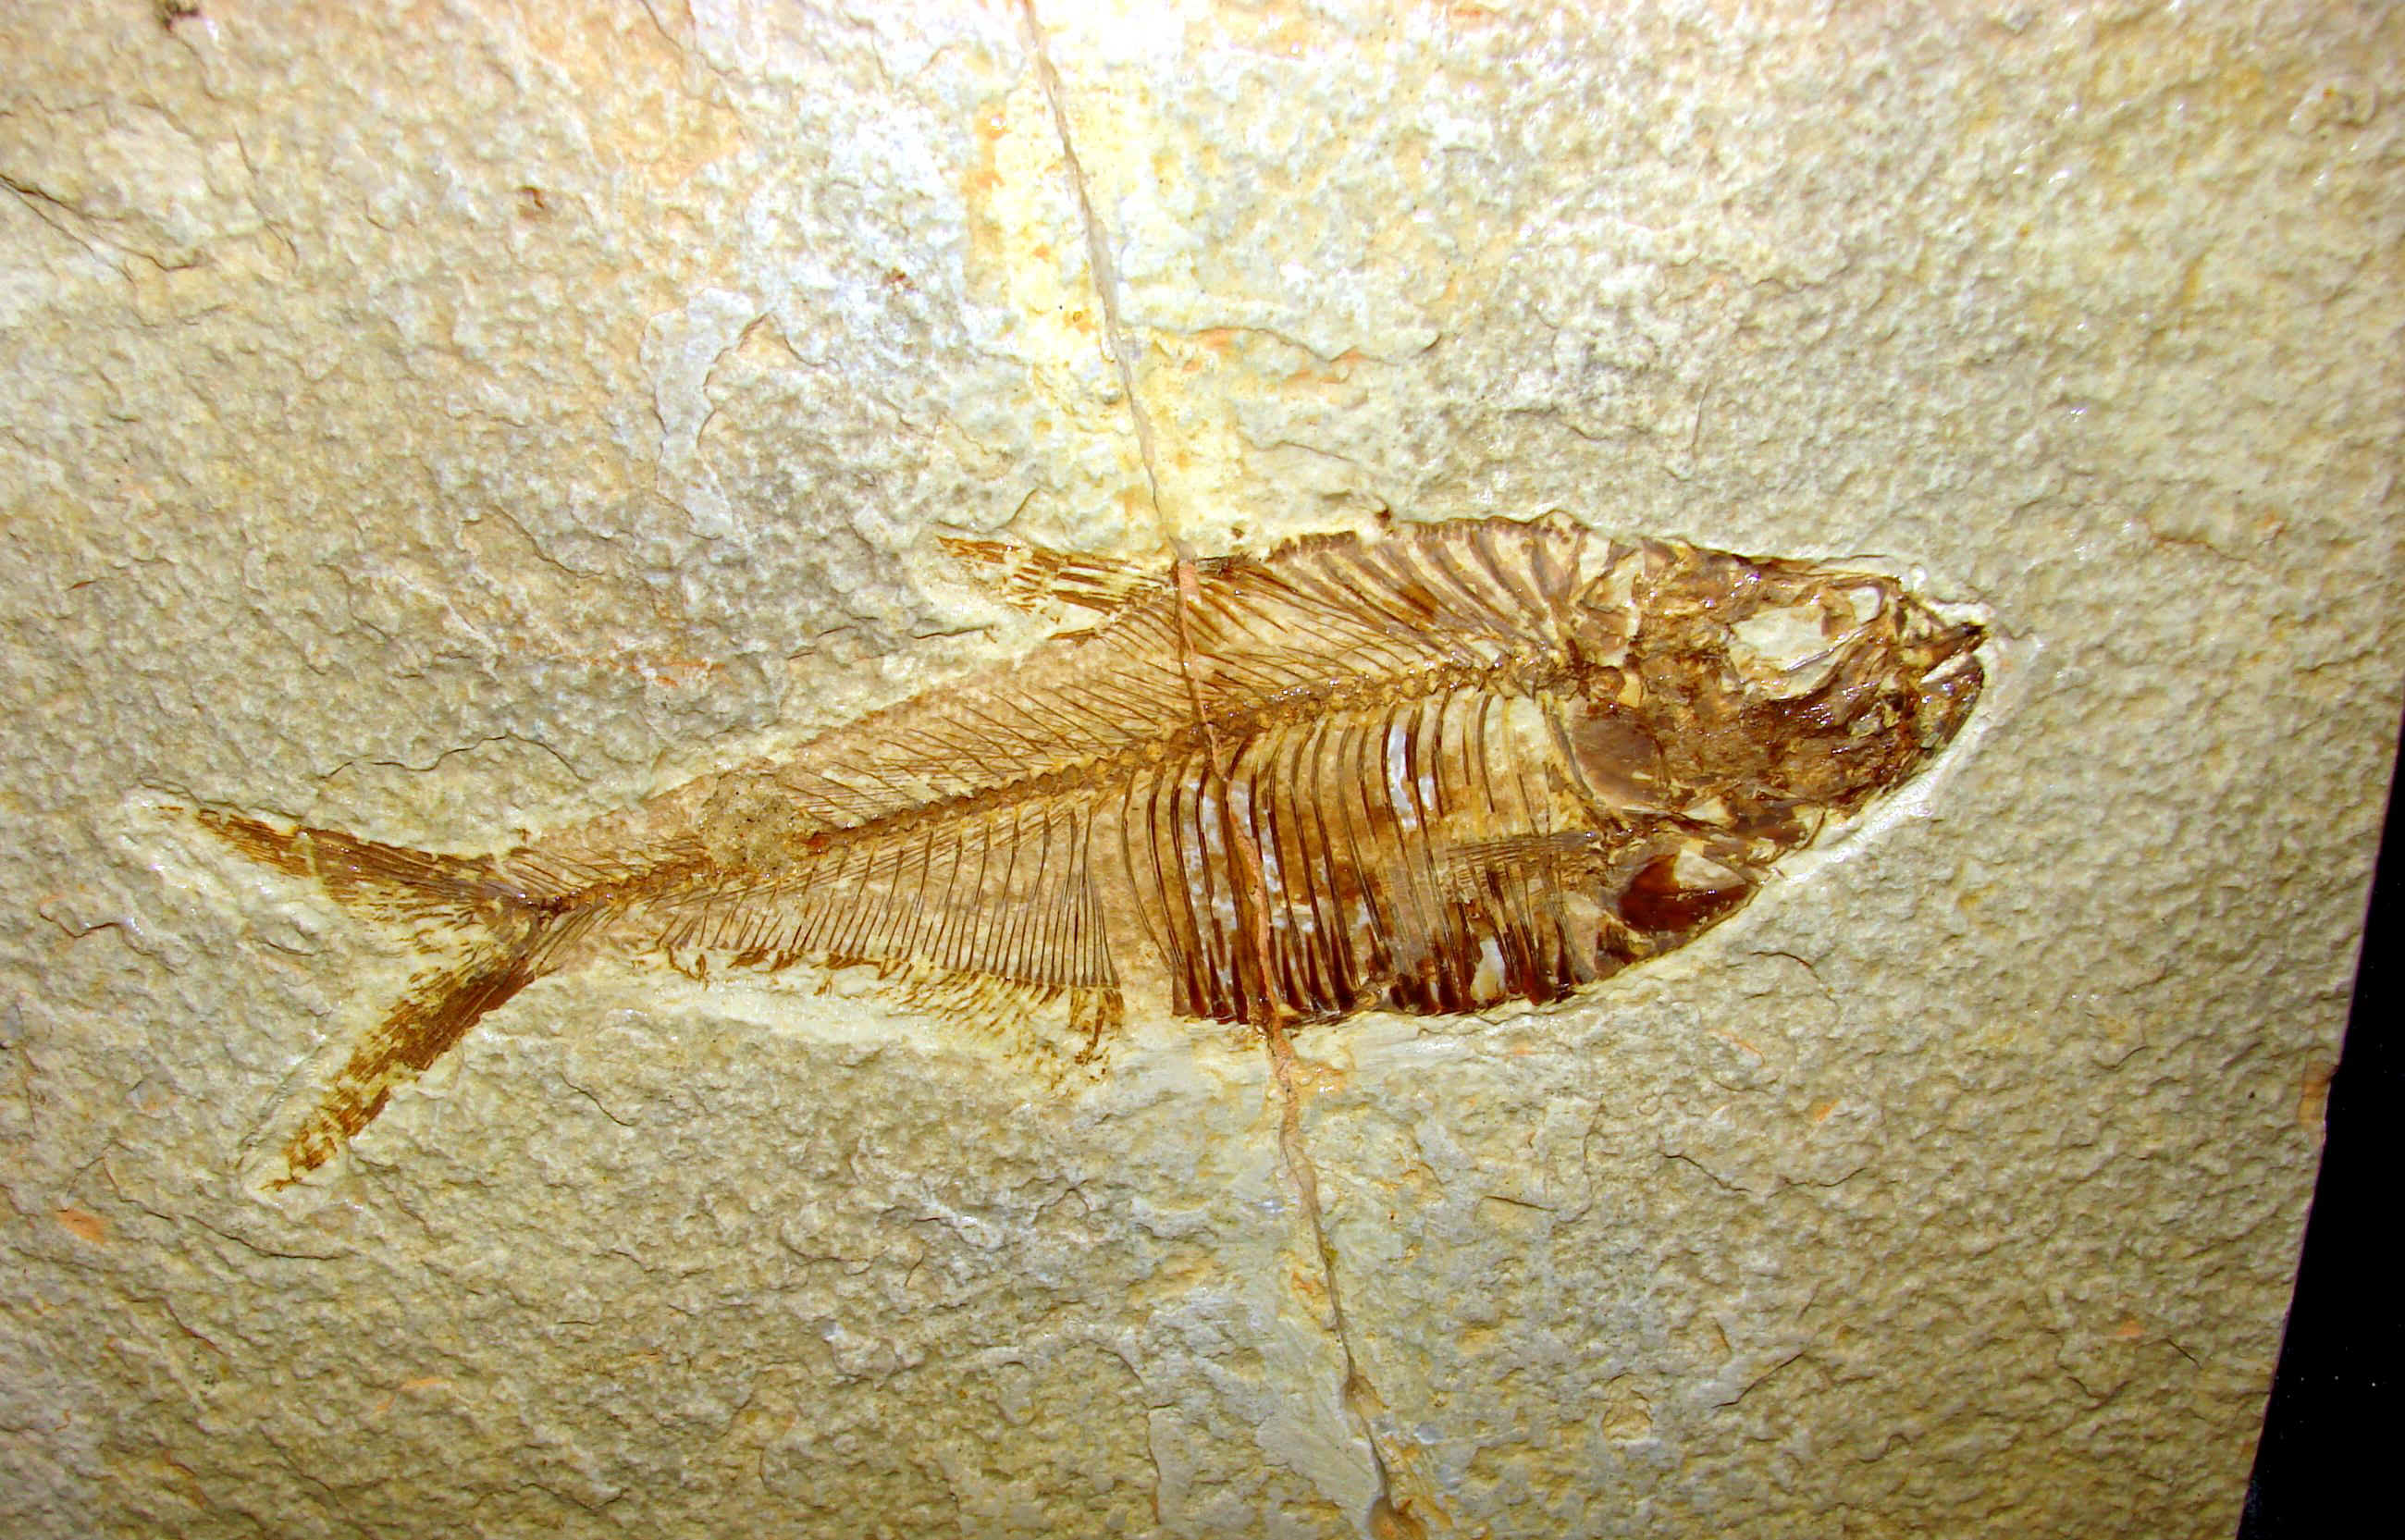 http://www.artfromgod.com/fossilfish-14.jpg (807370 bytes)